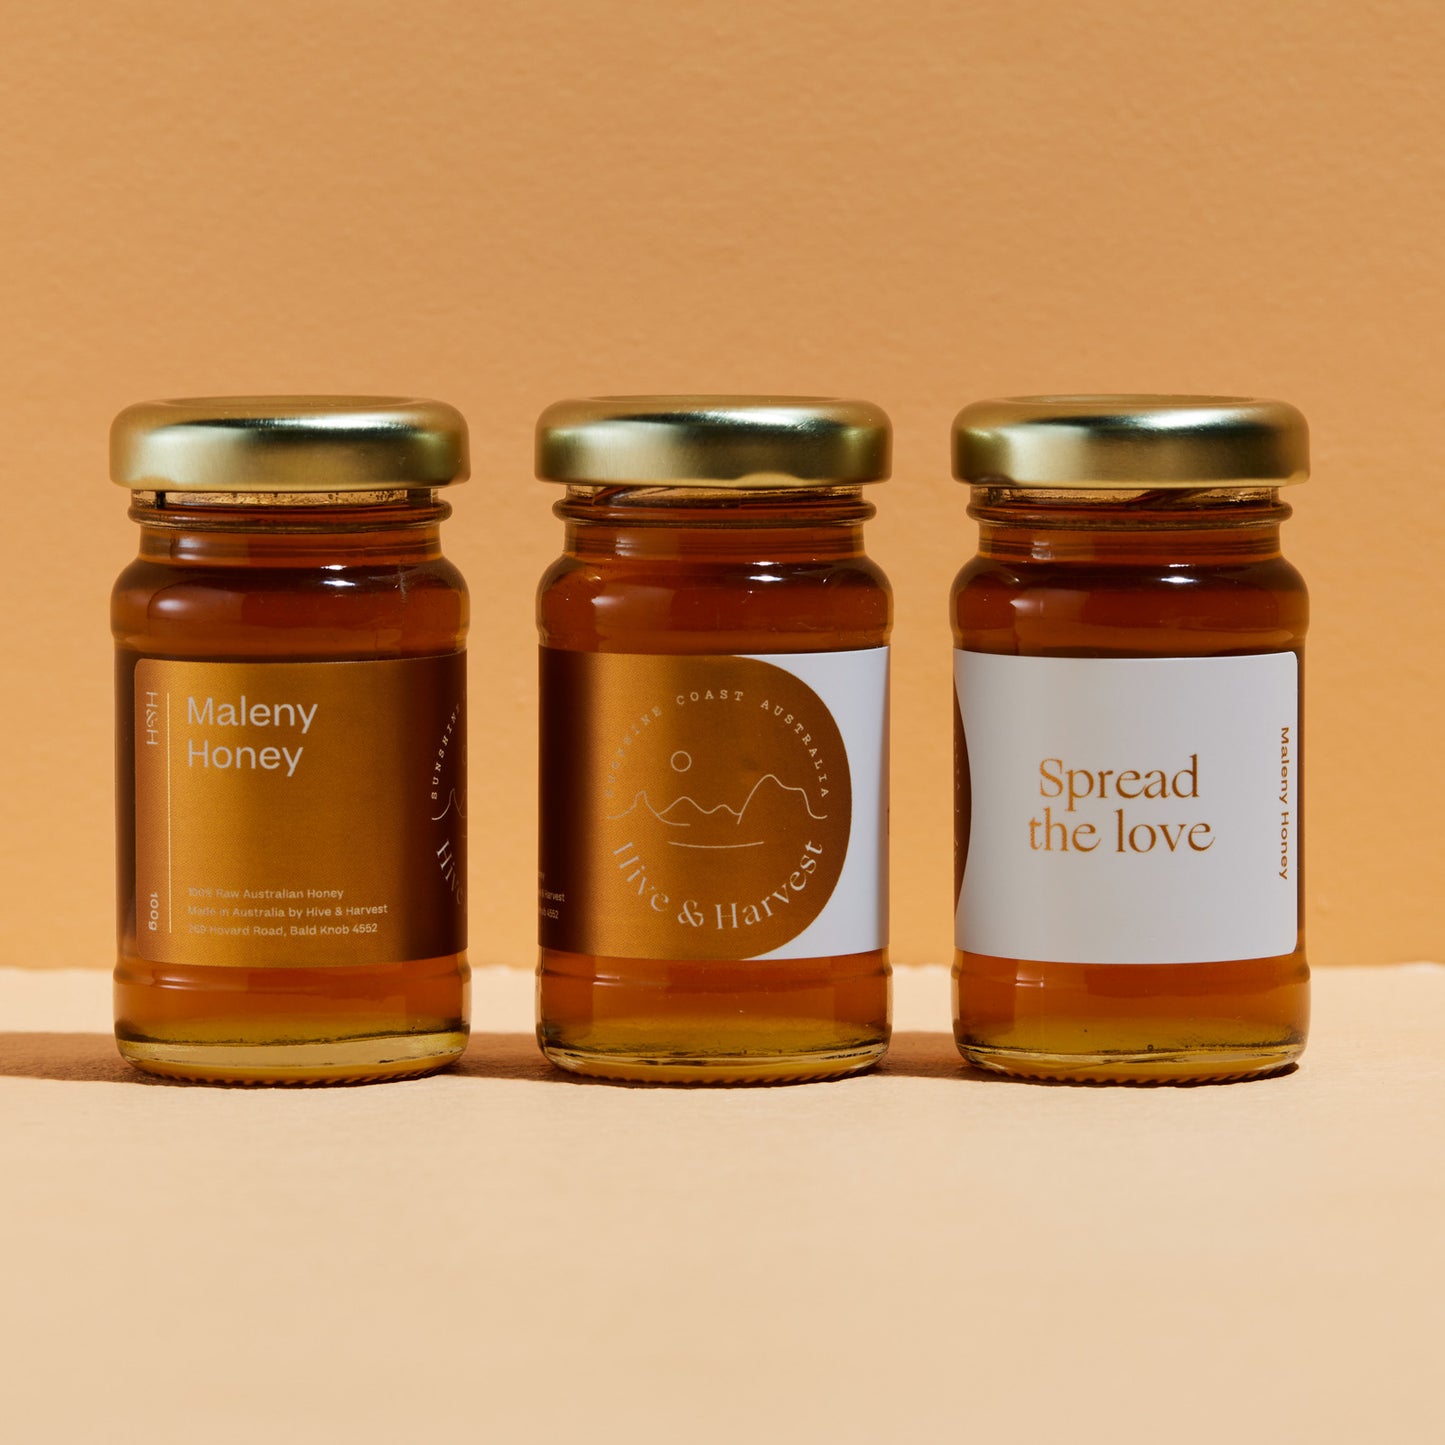 Maleny Honey Petite "Spread the Love"